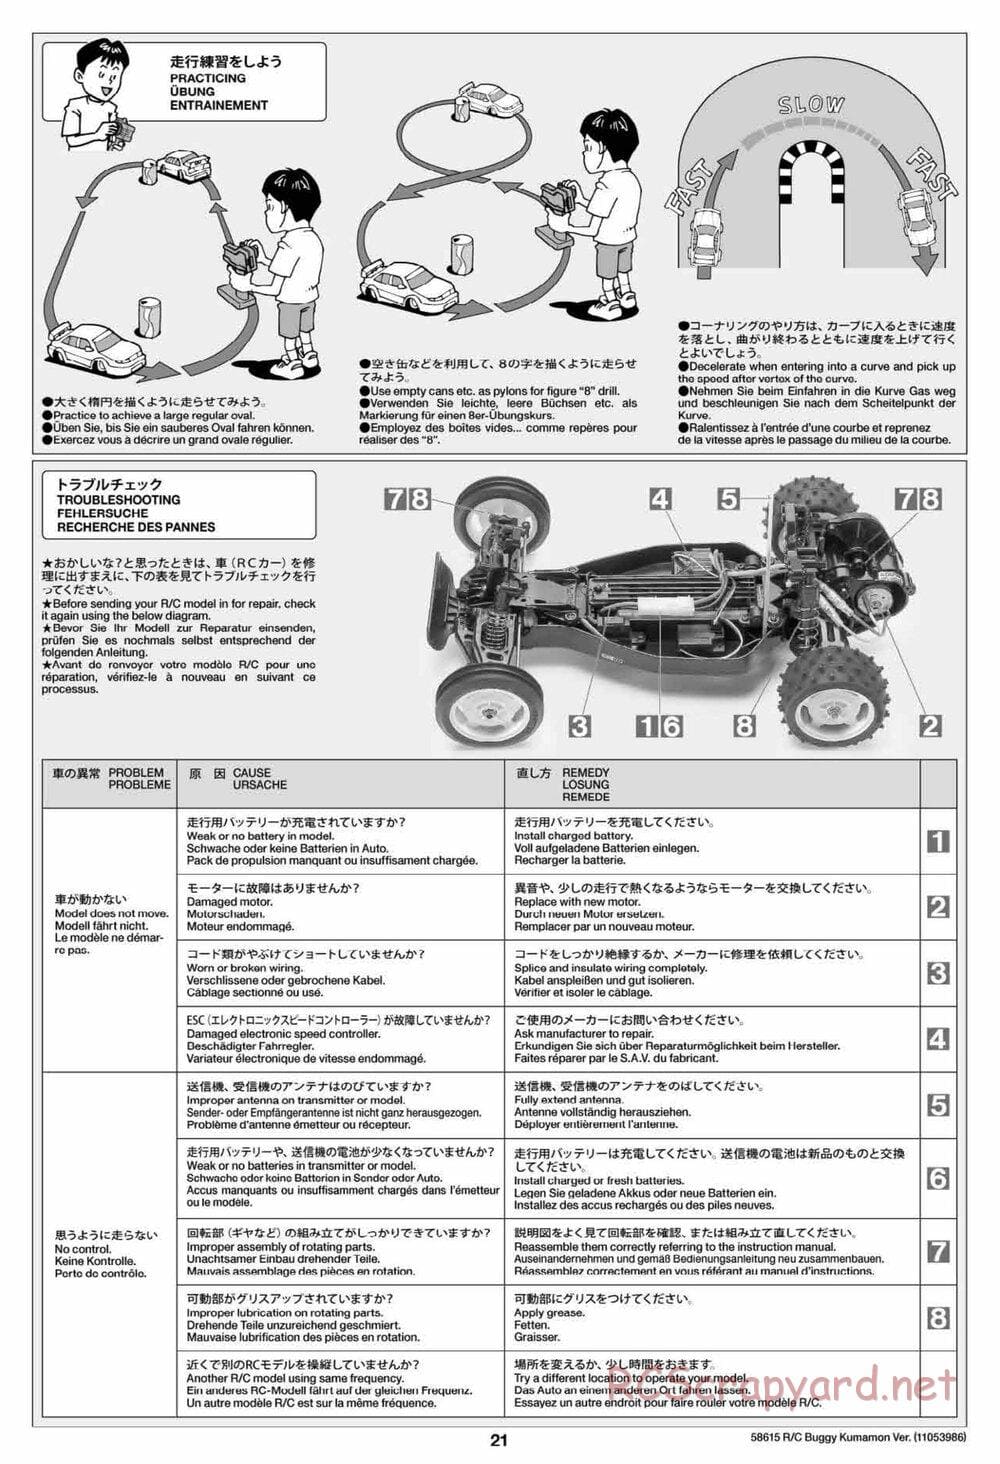 Tamiya - Buggy Kumamon Version Chassis - Manual - Page 21